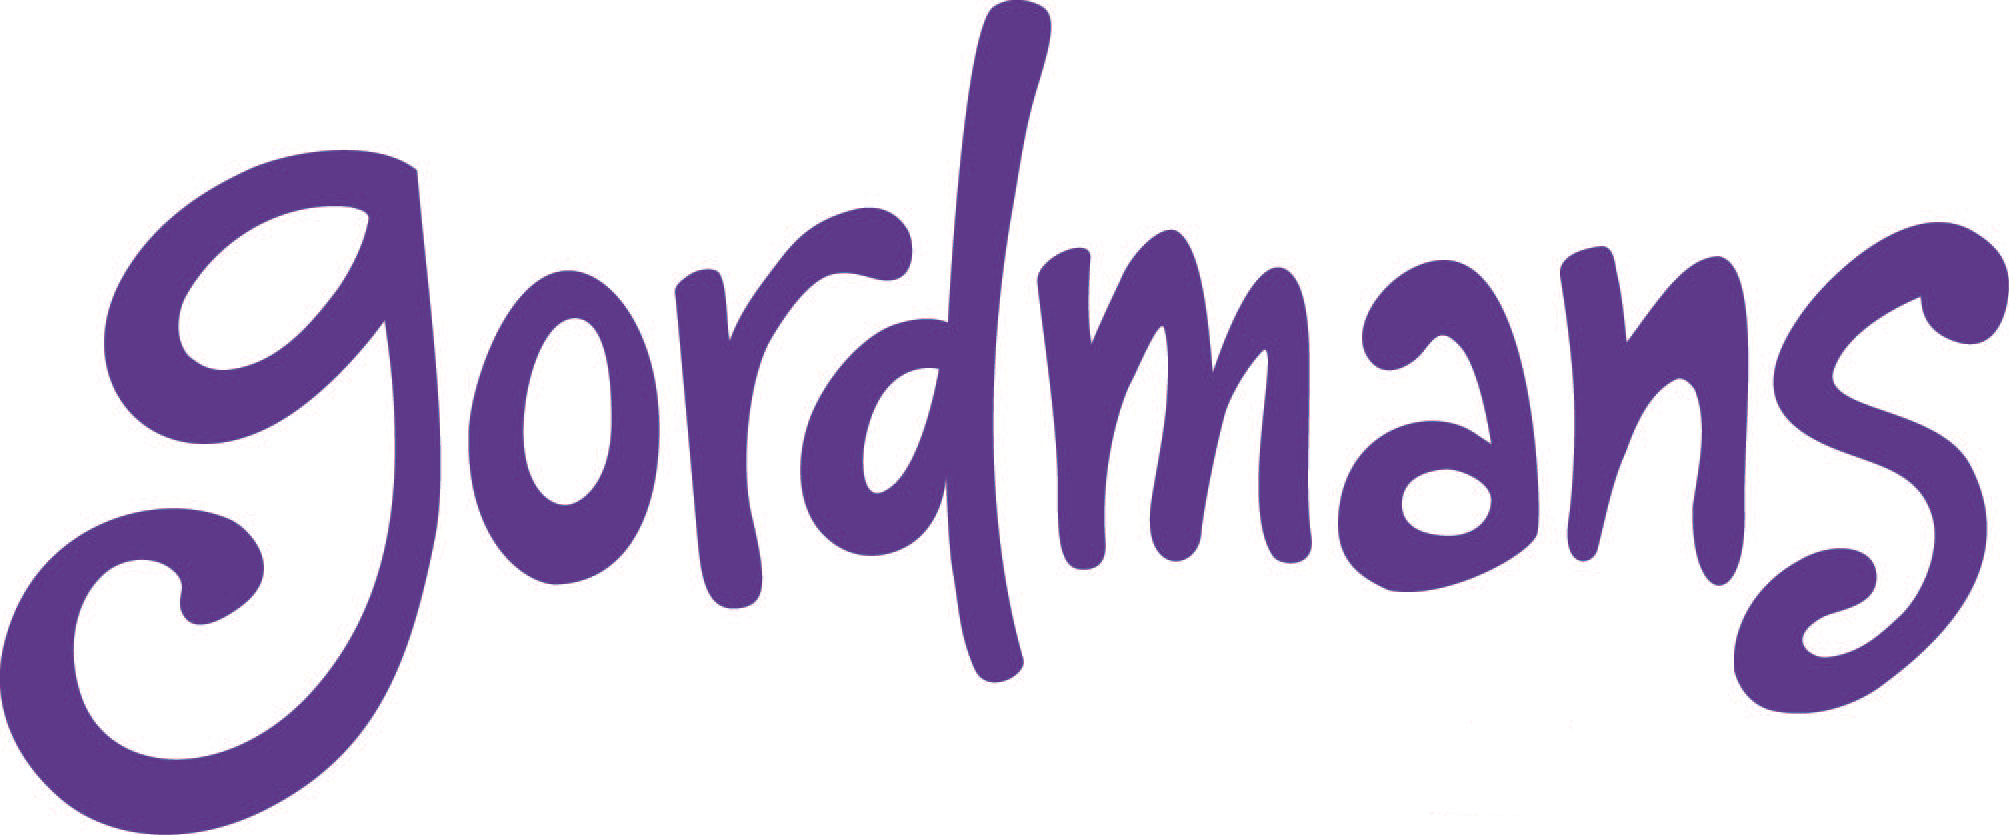 Gordmans_Purple_Logo.jpg